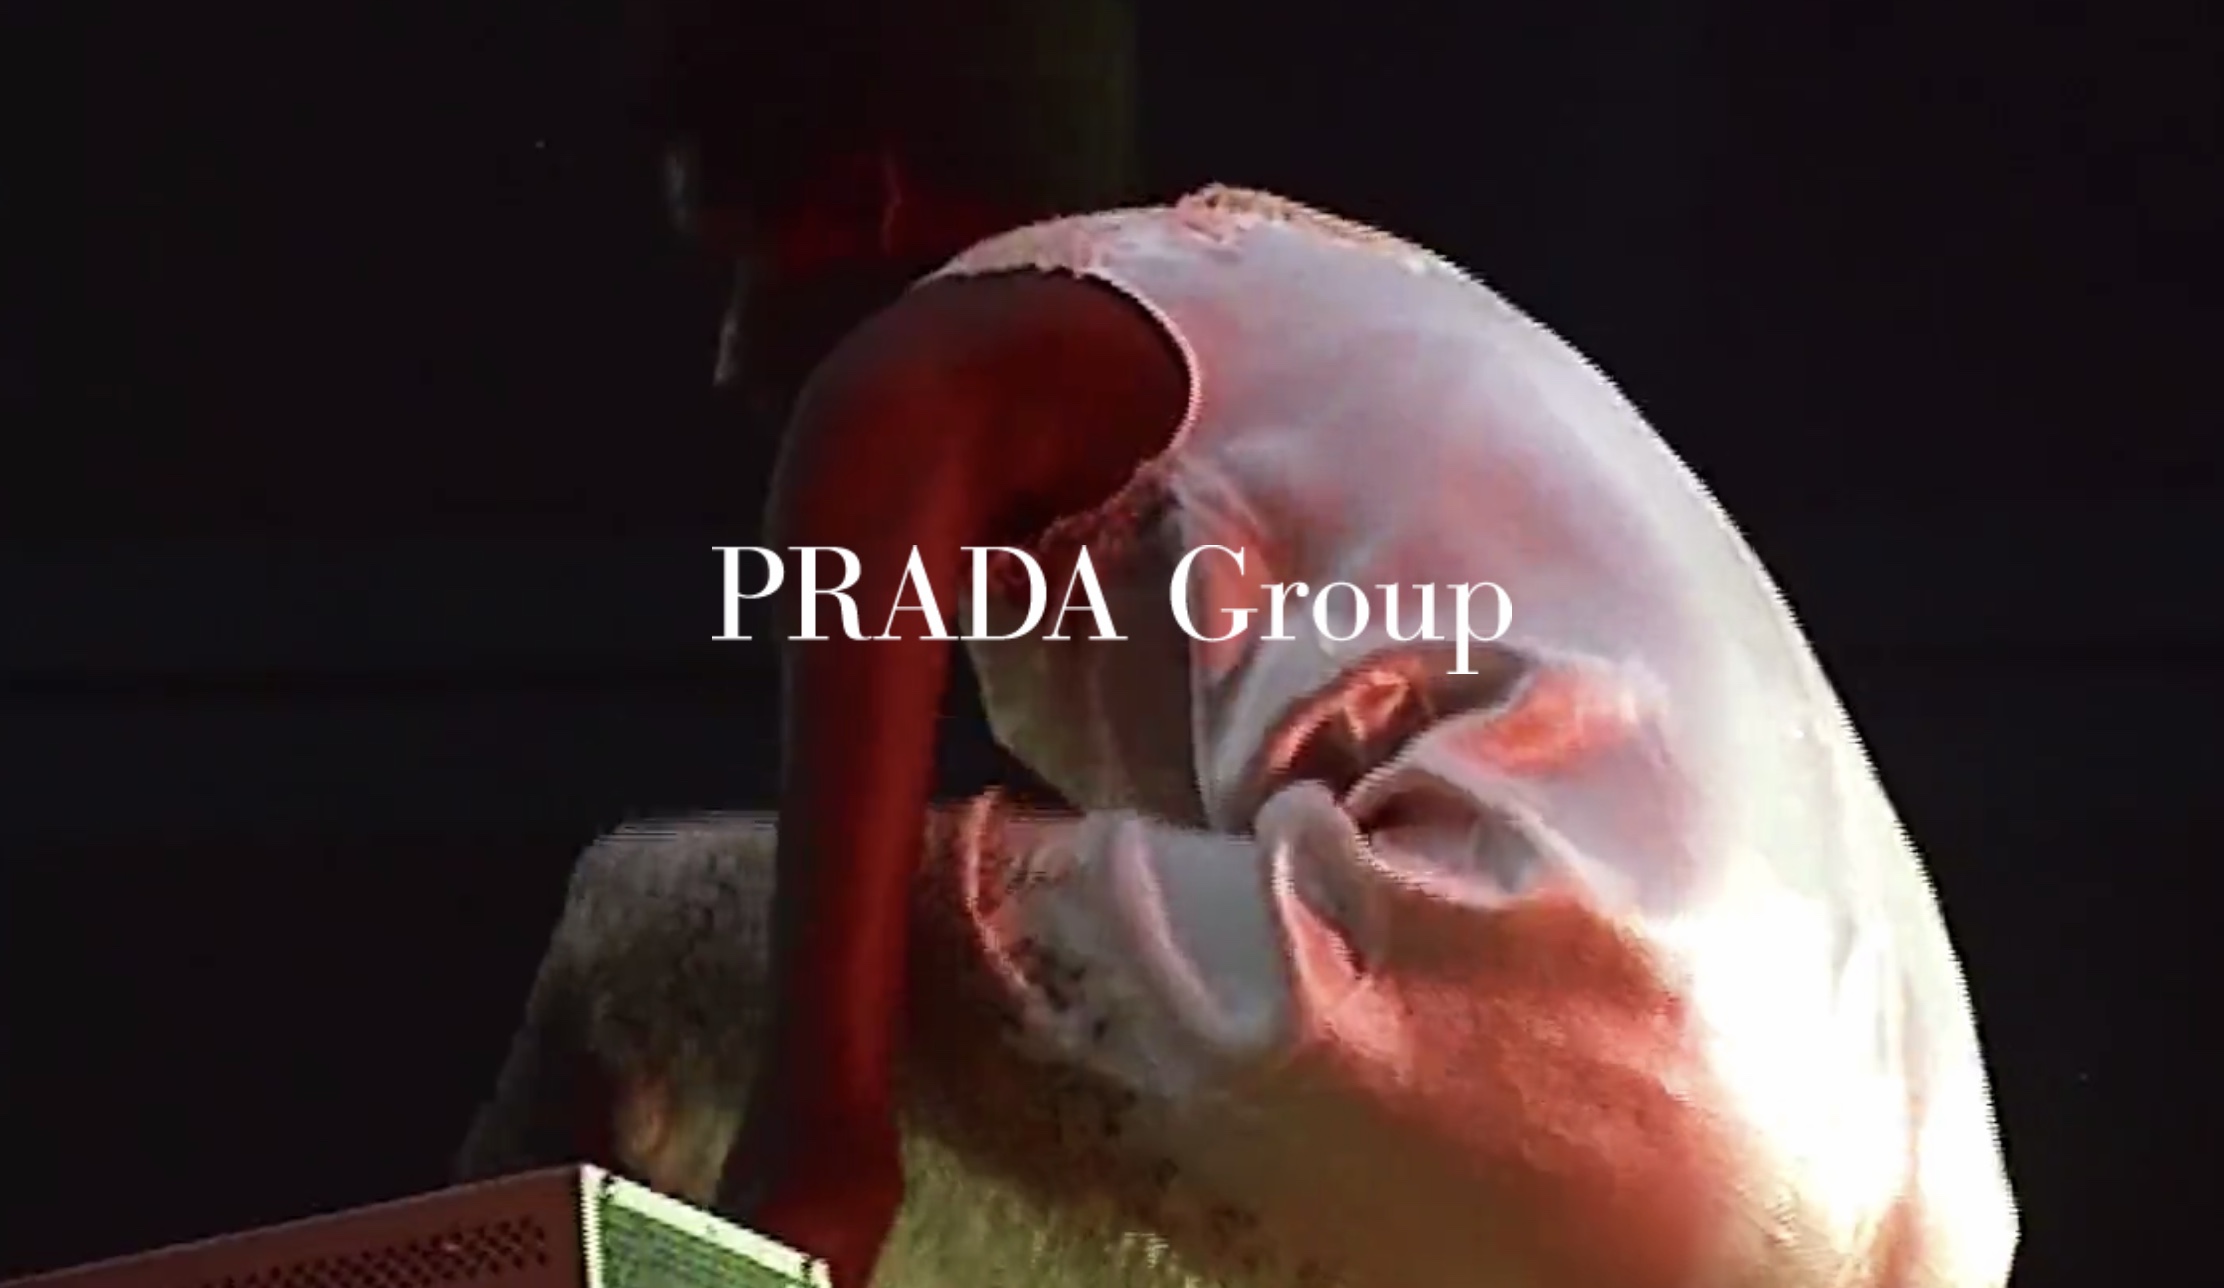 Prada Mode 将与知名导演贾樟柯合作，在上海荣宅举办主题为“MIÀN/面”的文化活动